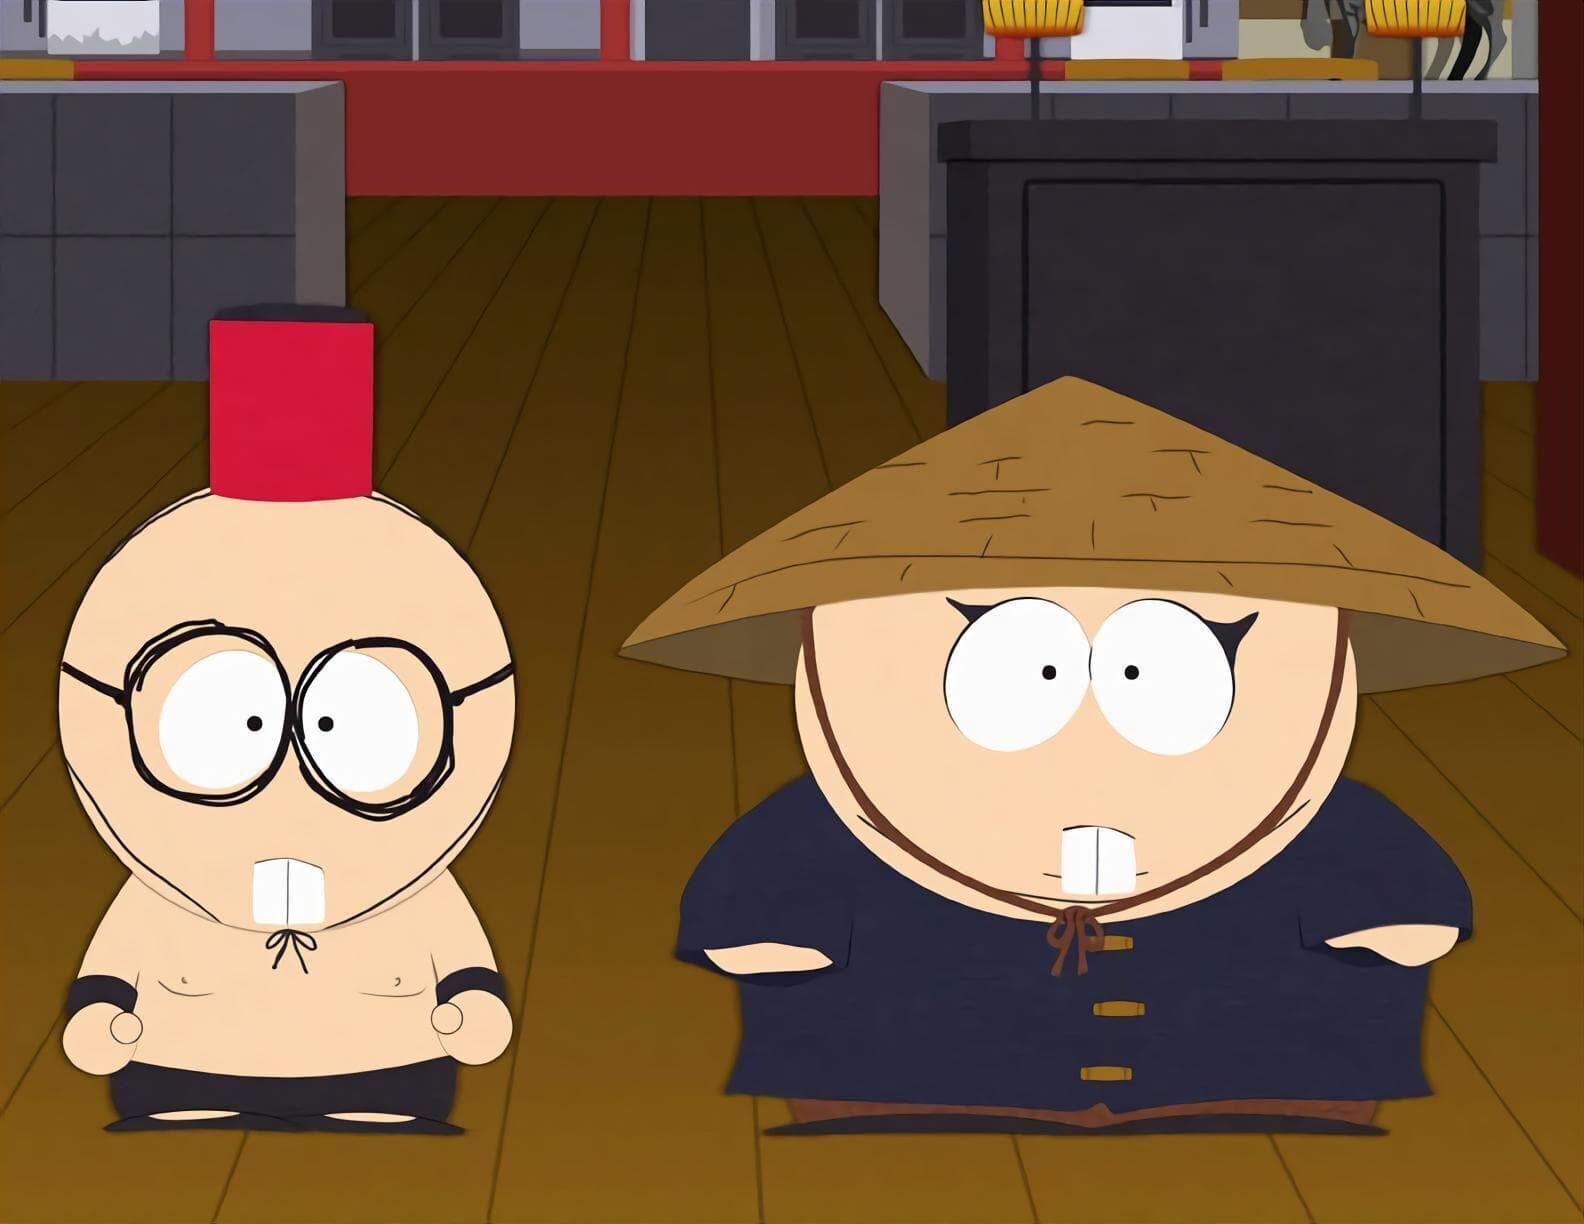 South Park - The China Problem